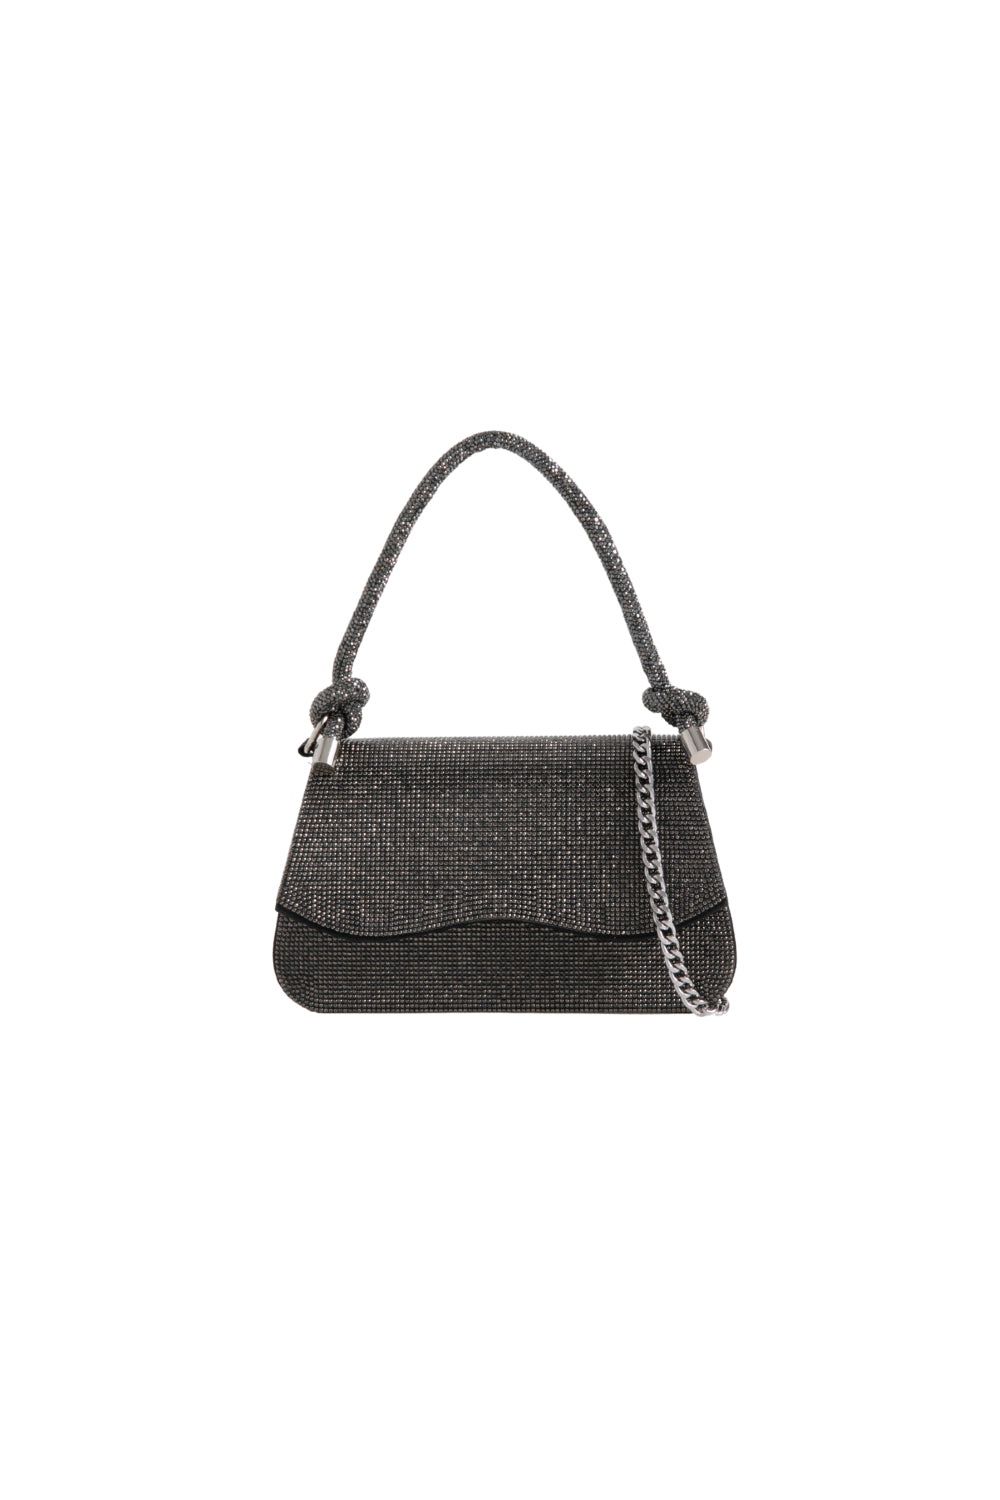 Black Diamante Top Handle Bag With Knot Details